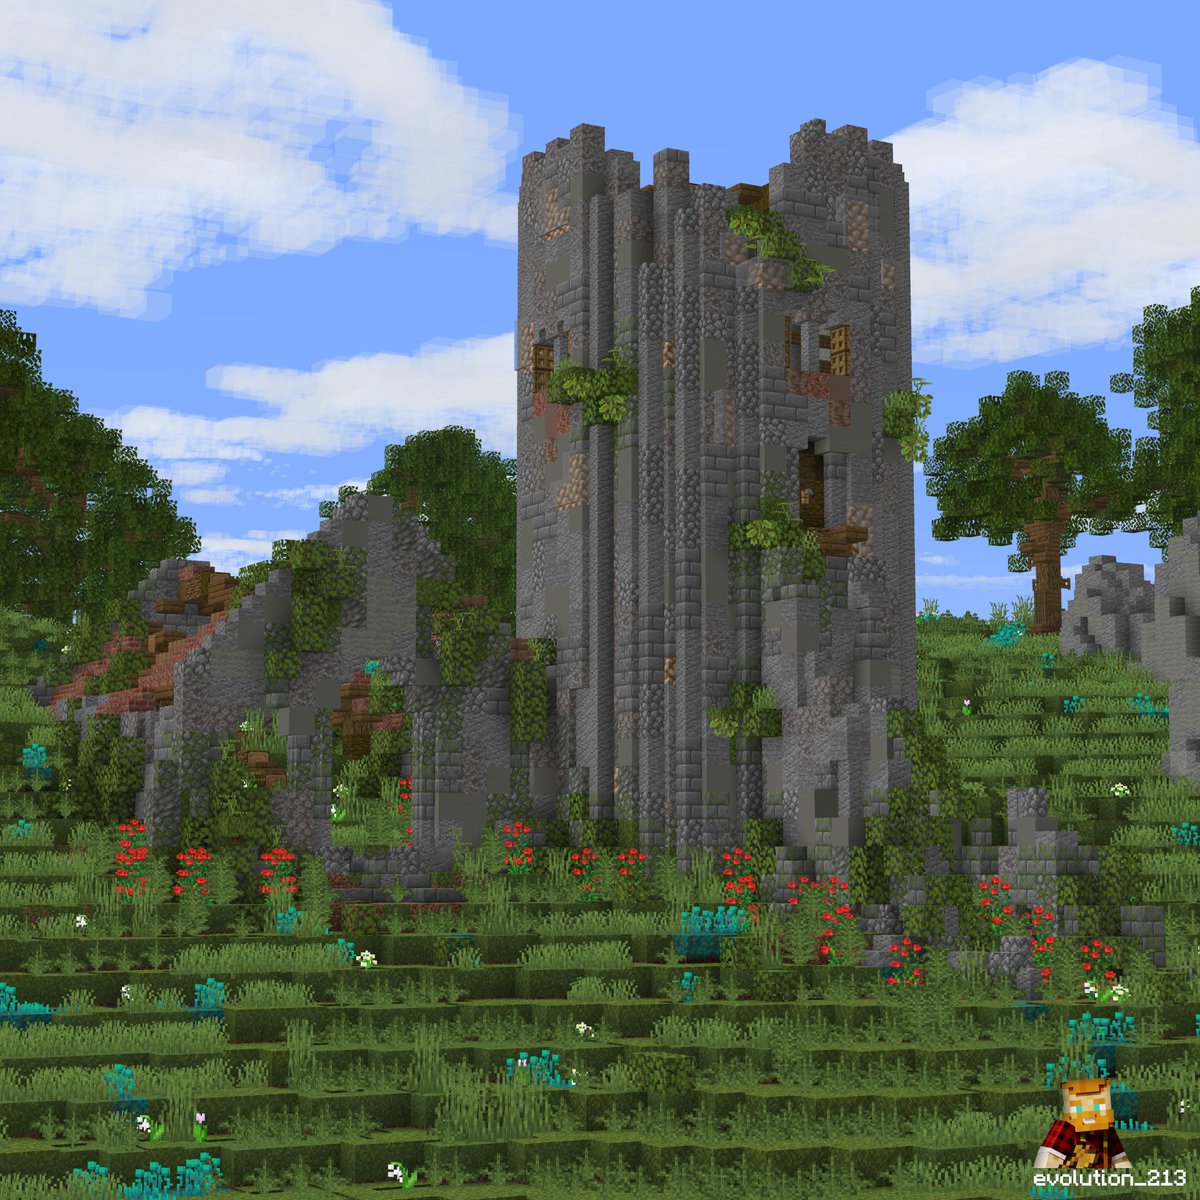 Castle Ruins
#Minecraft #minecraft建築コミュ #Minecraftbuild